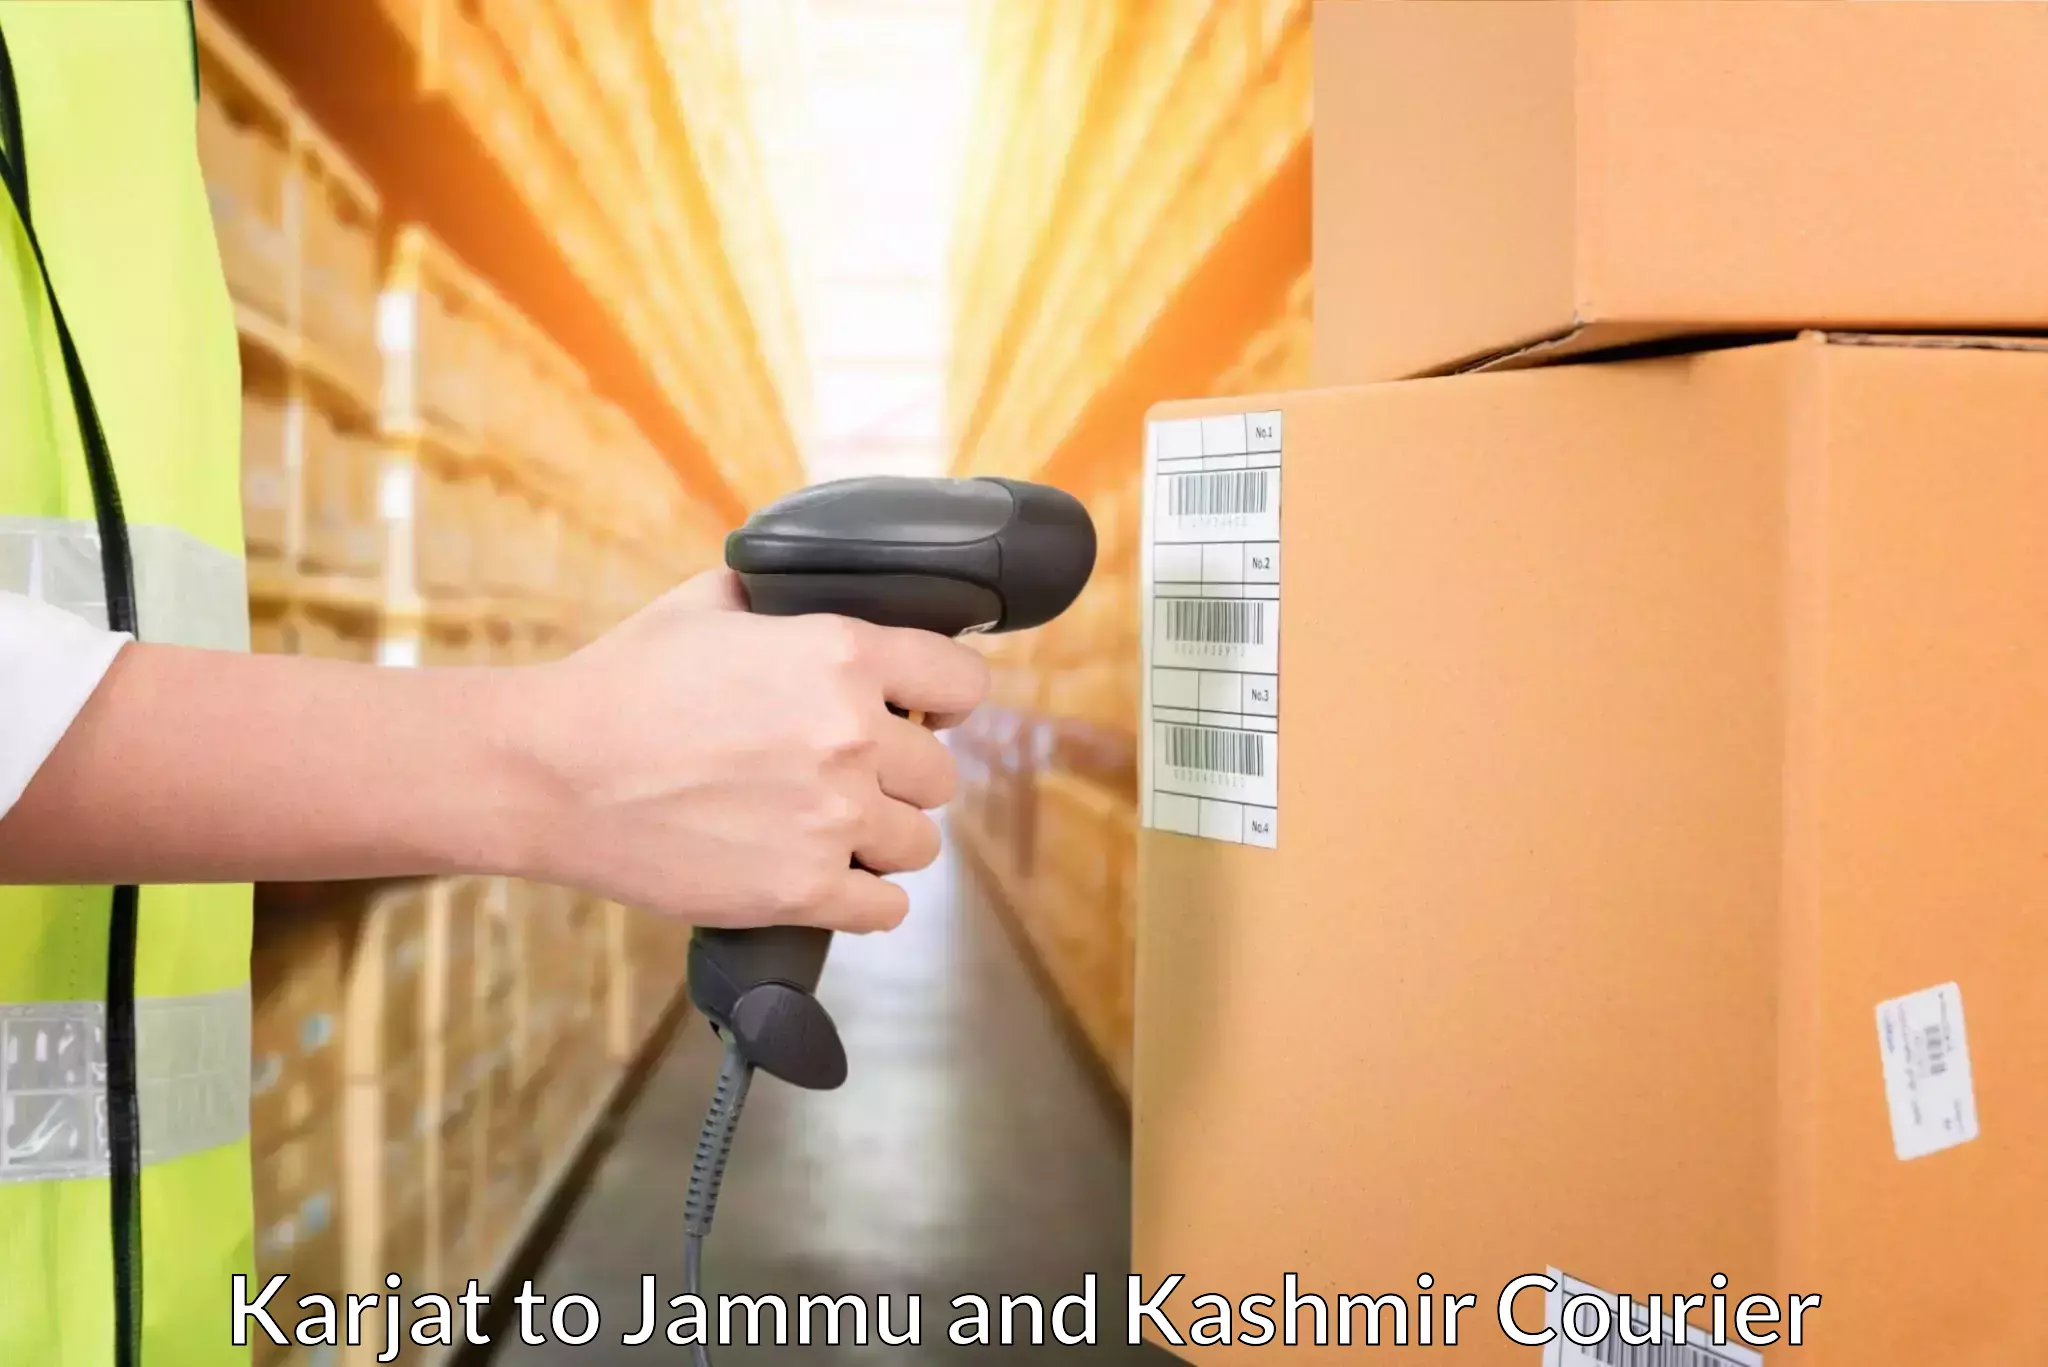 Cost-effective courier options Karjat to Srinagar Kashmir